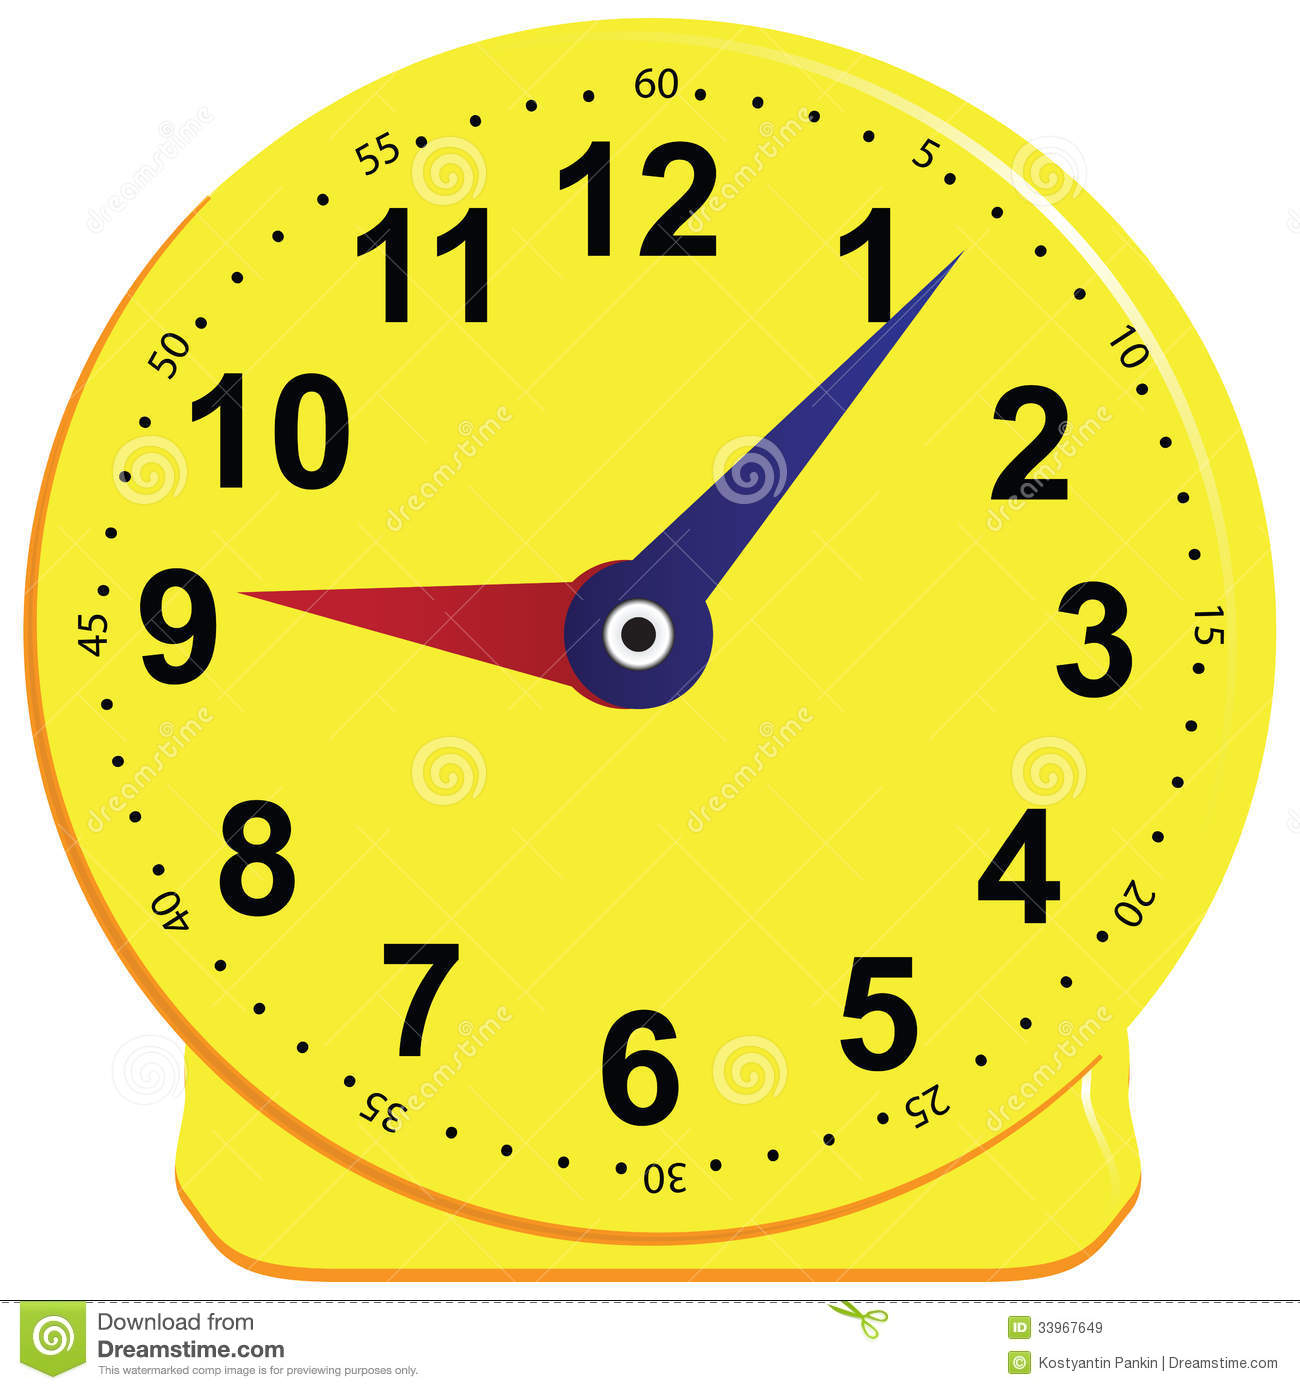 free animated clipart of clocks - photo #46